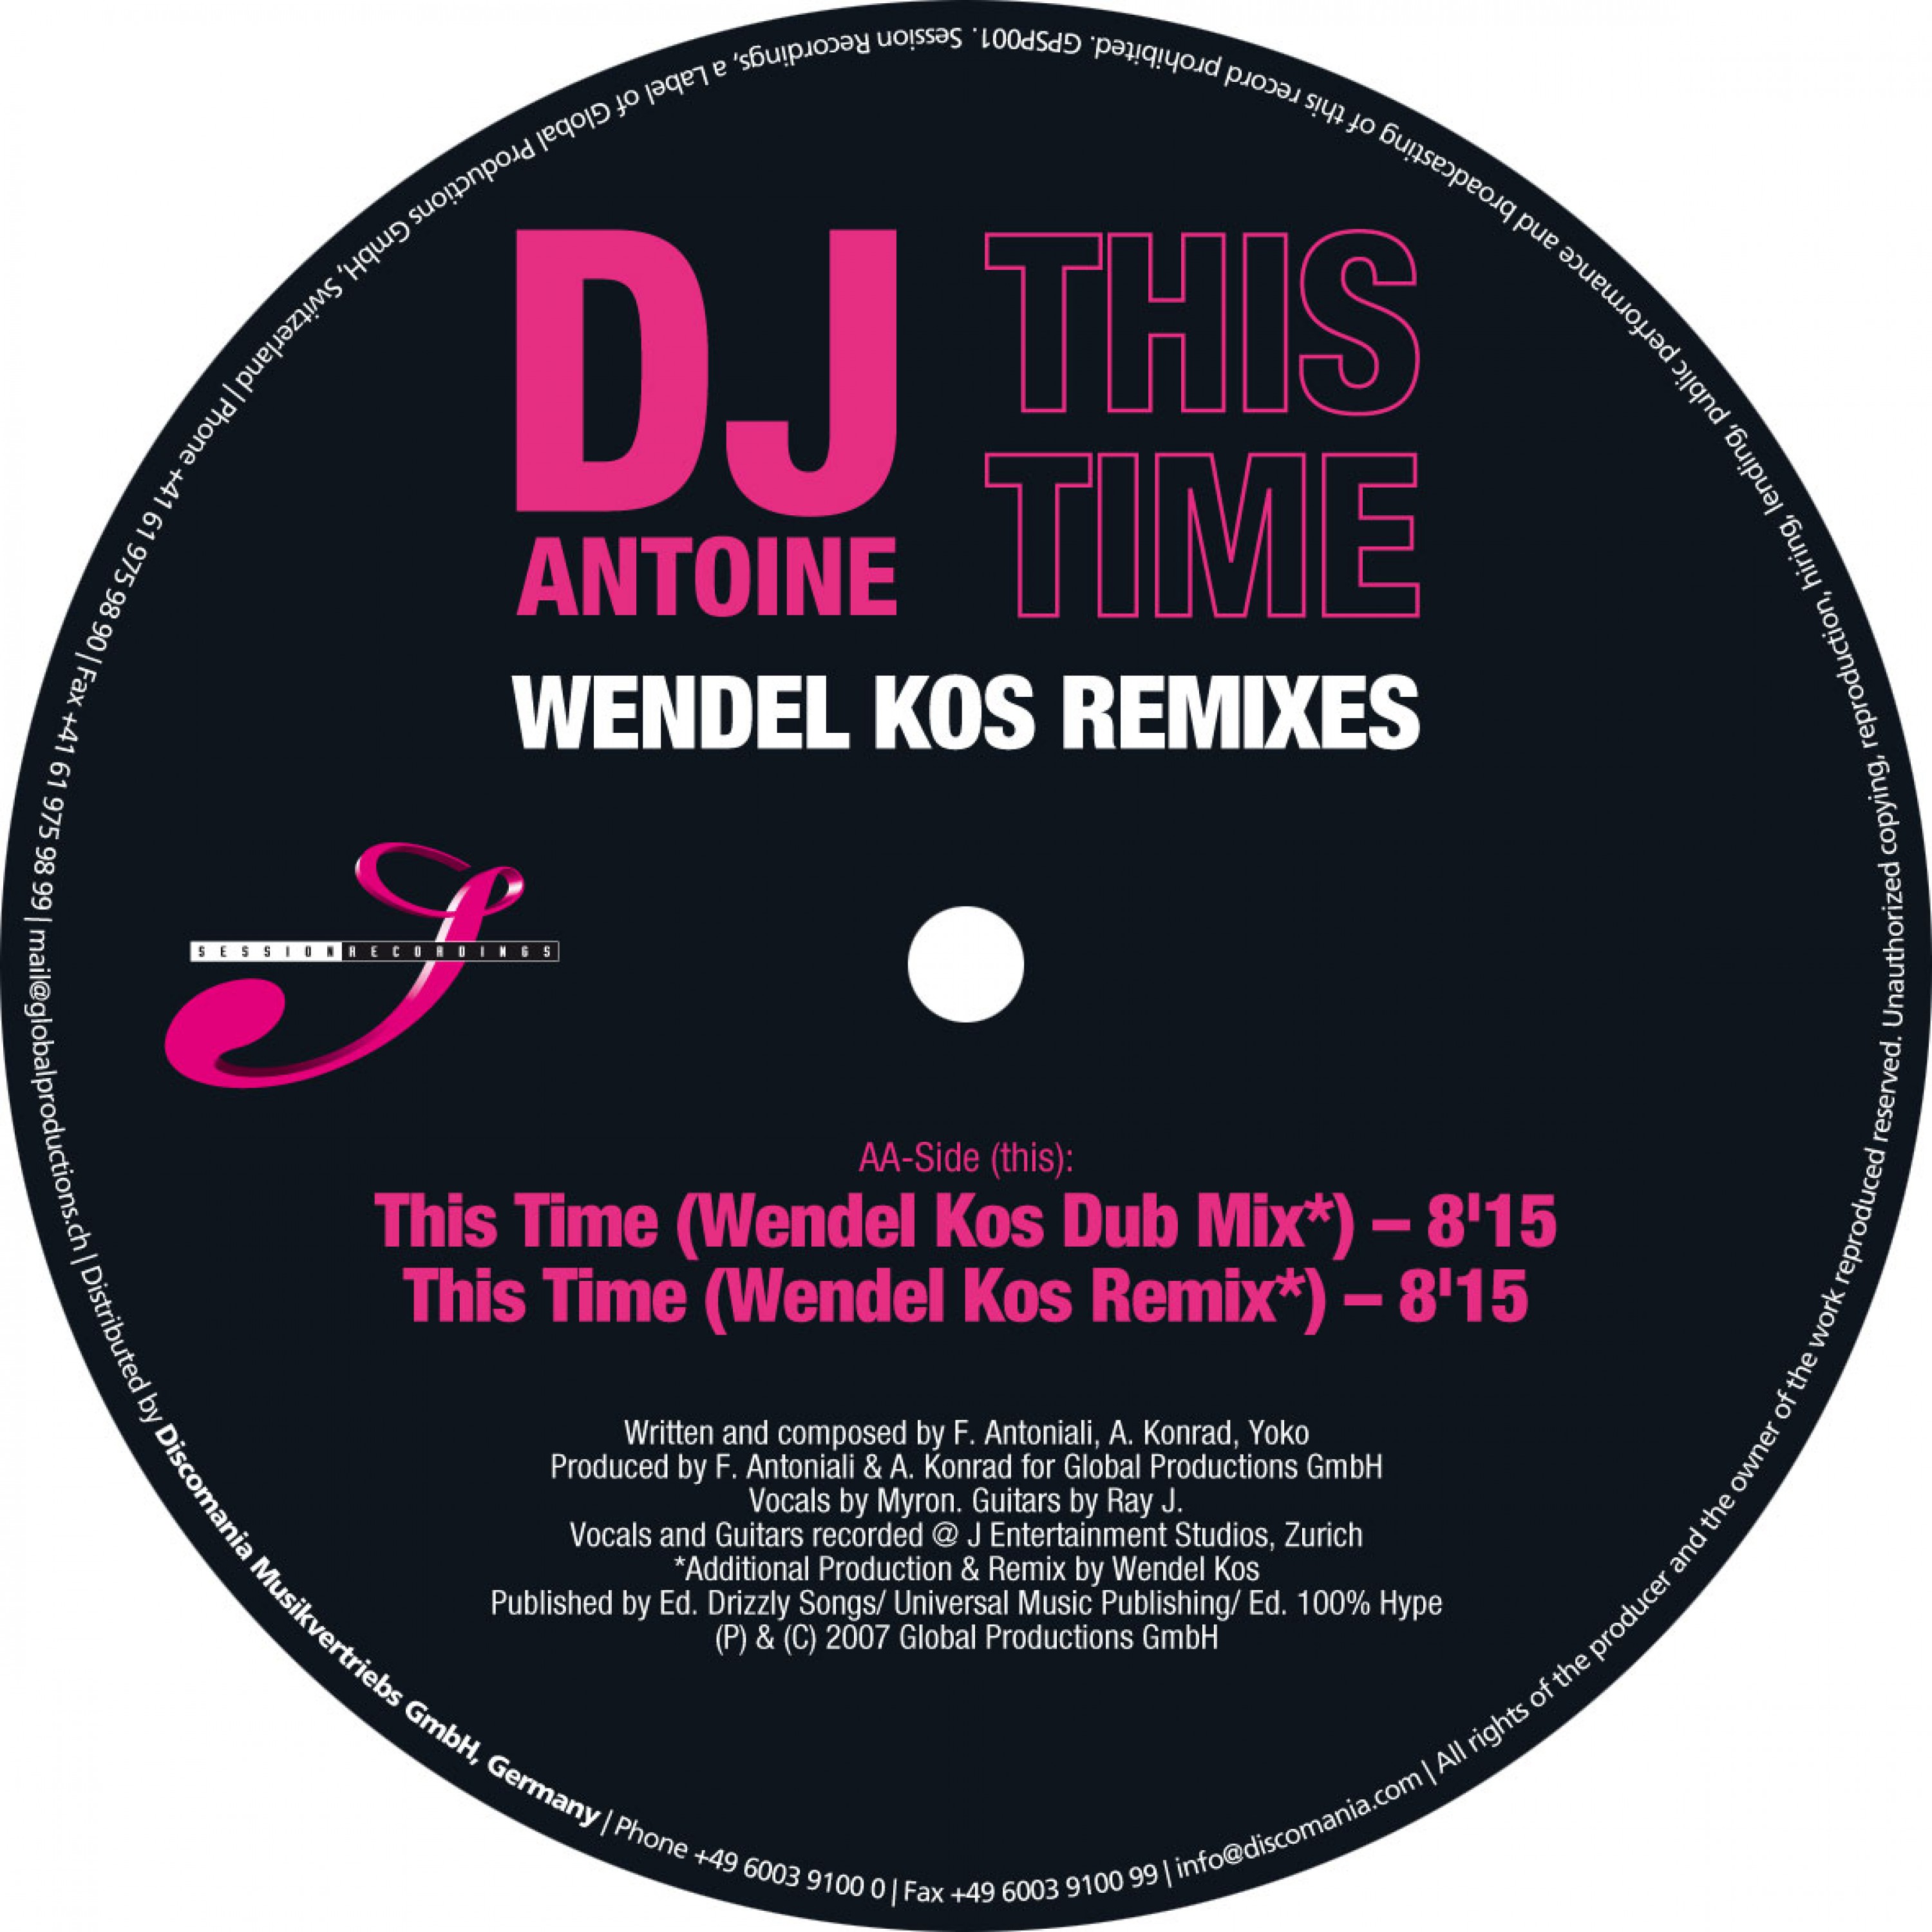 This Time (Wendel Kos Dub Mix)